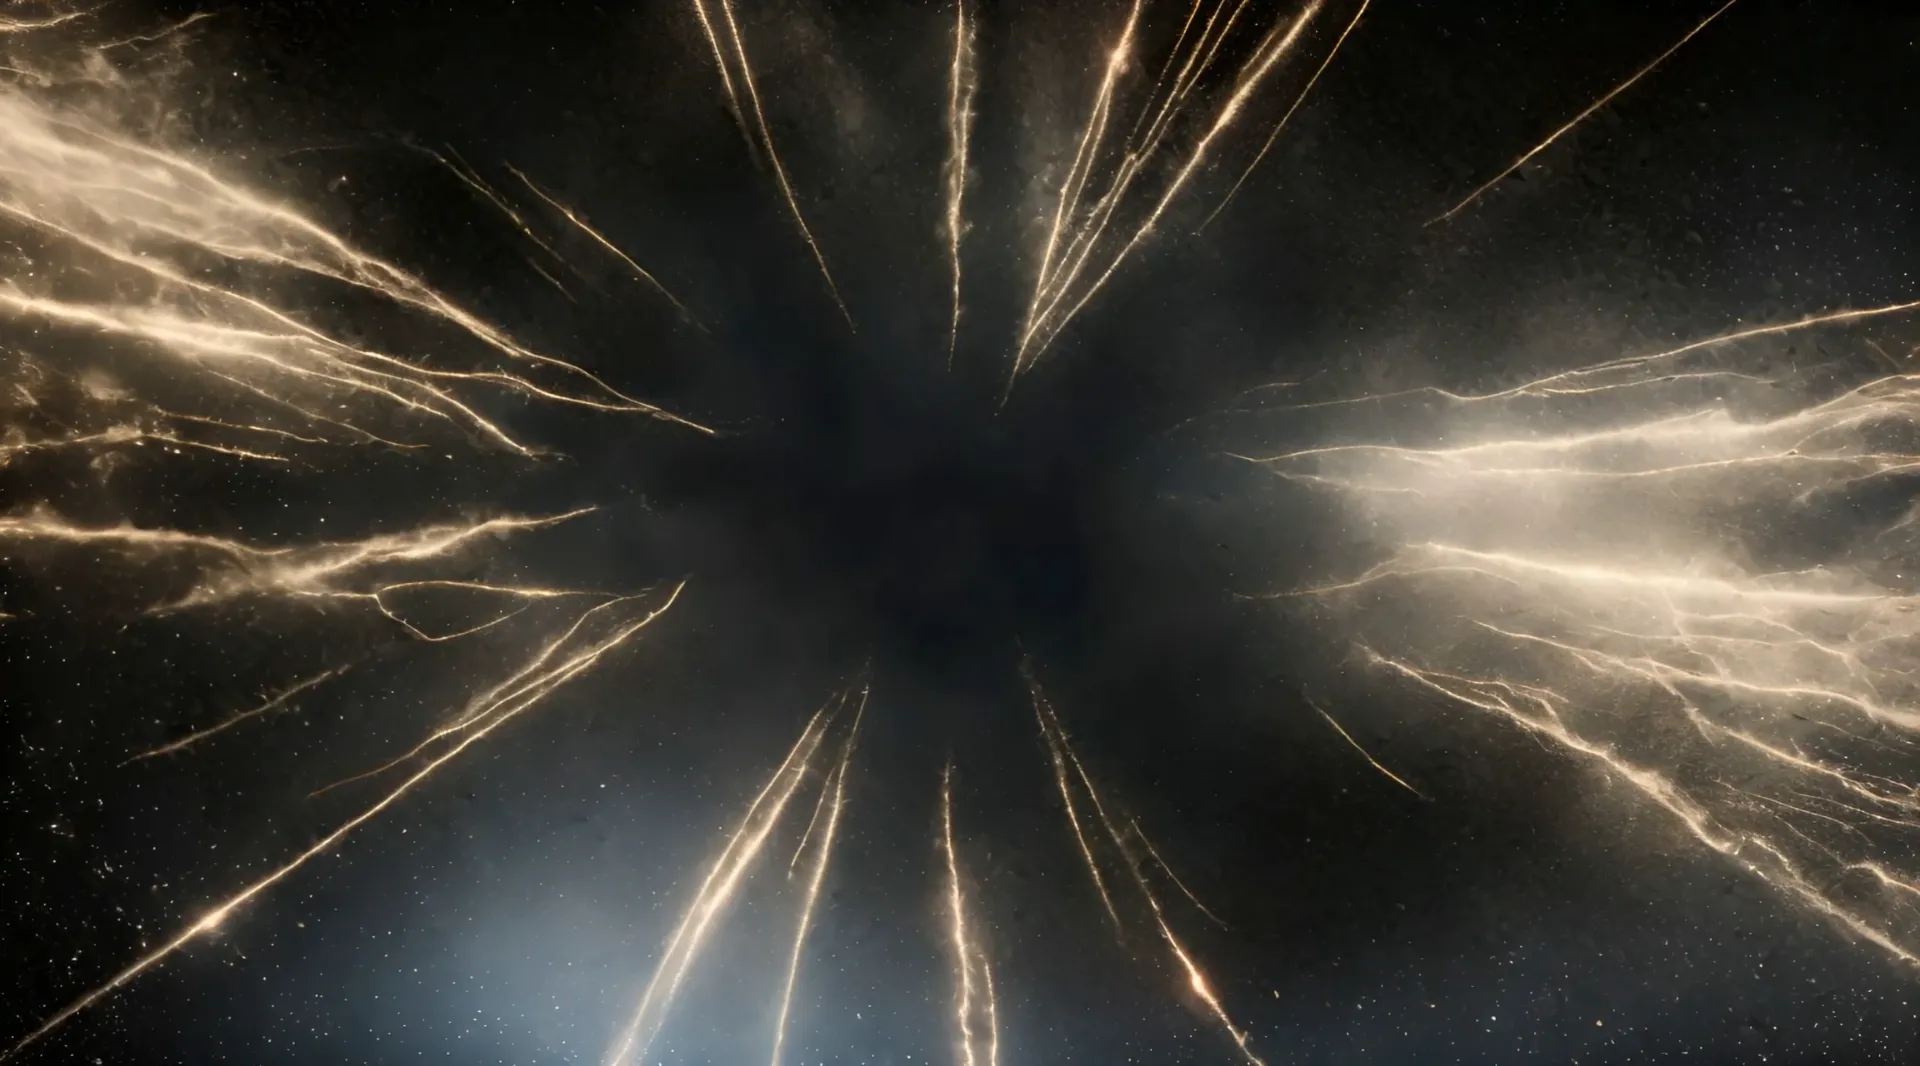 Supernova Light Explosions Vibrant Video Backdrop